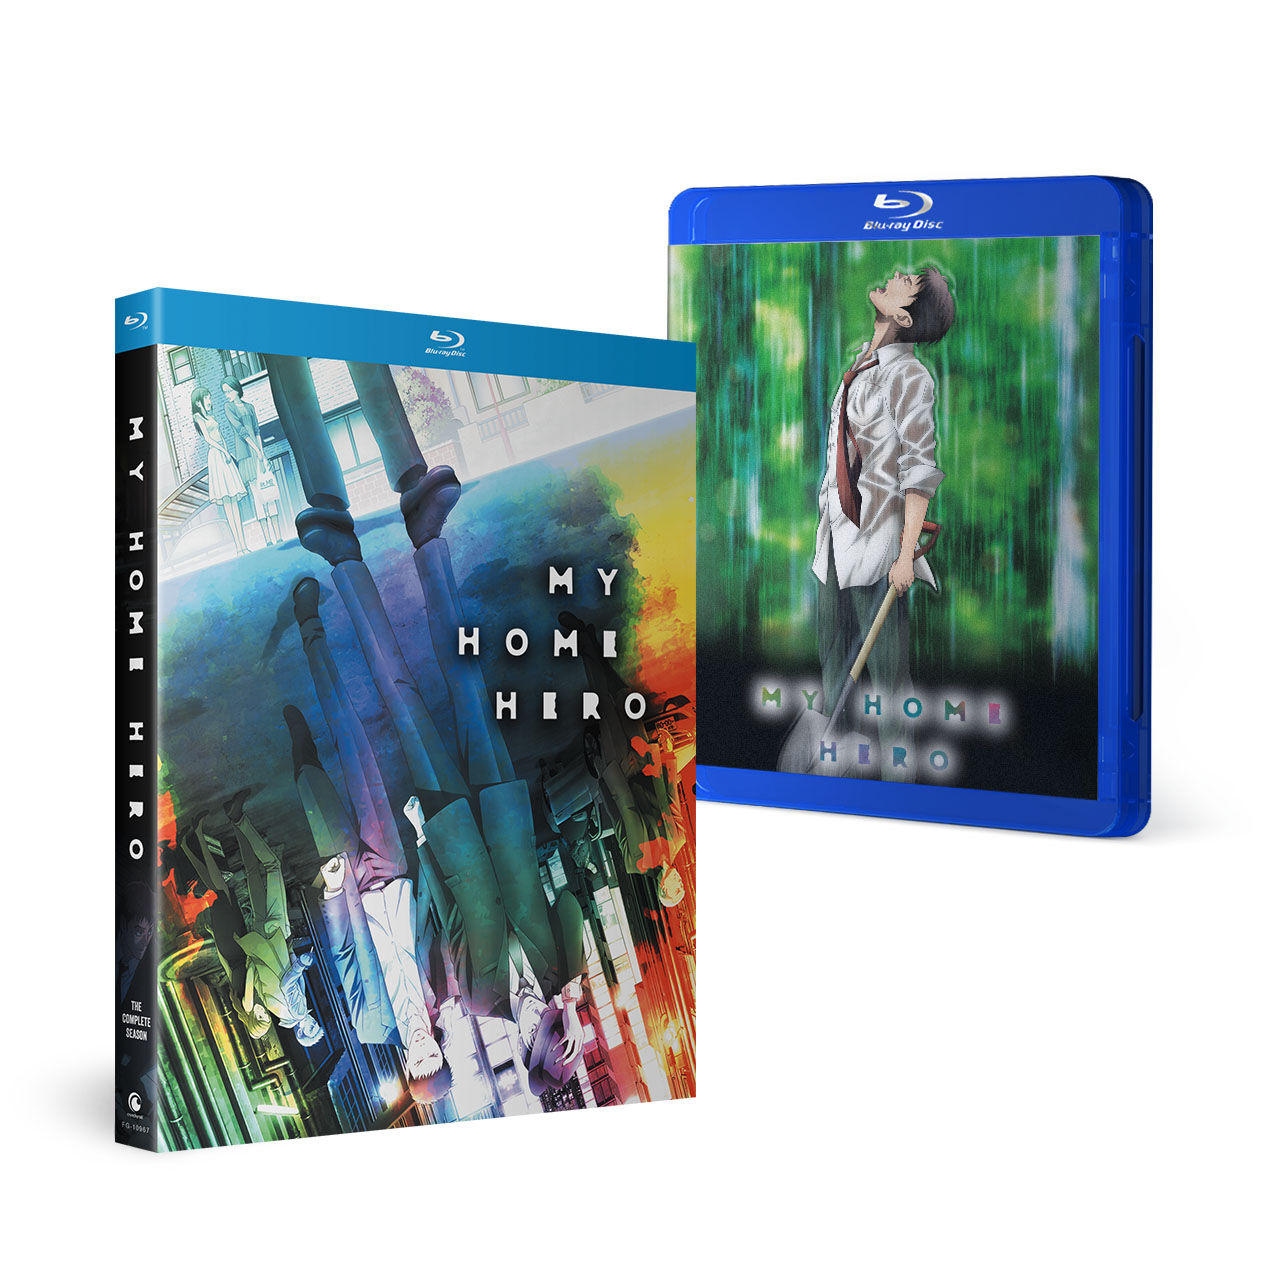 My Home Hero - The Complete Season - Blu-ray | Crunchyroll Store